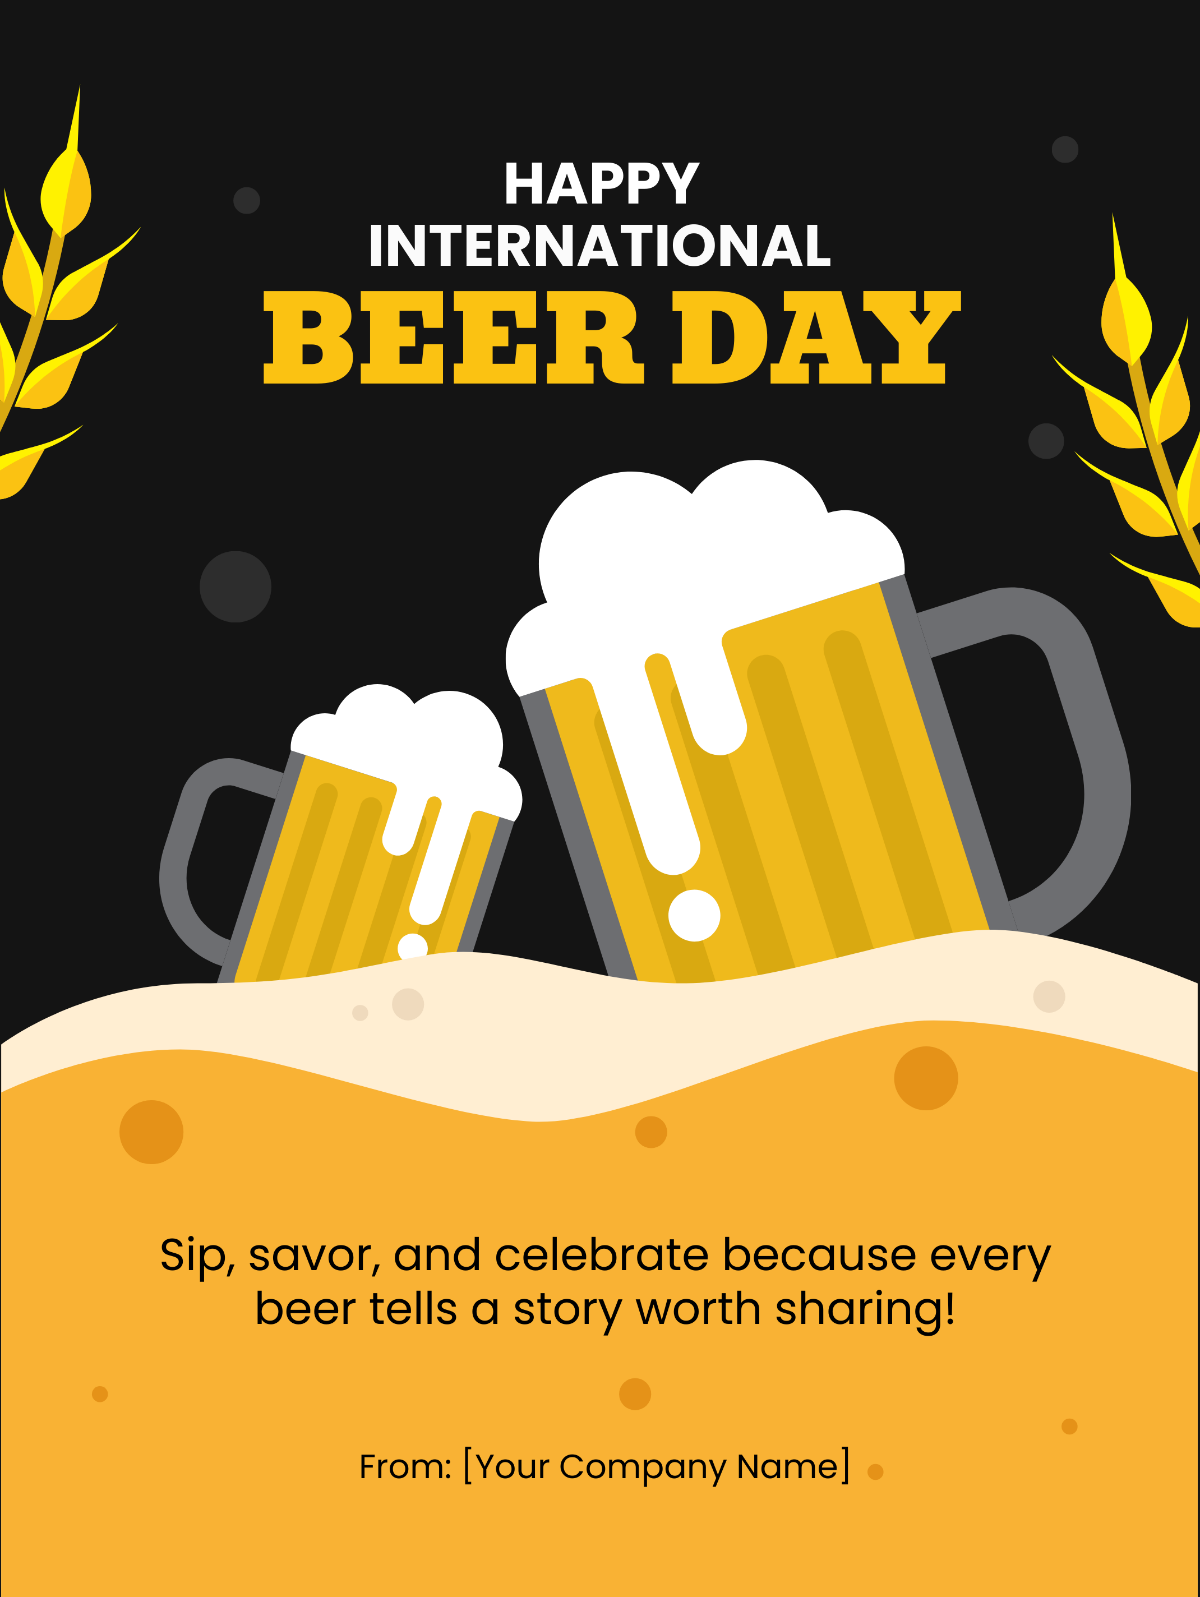 Happy International Beer Day